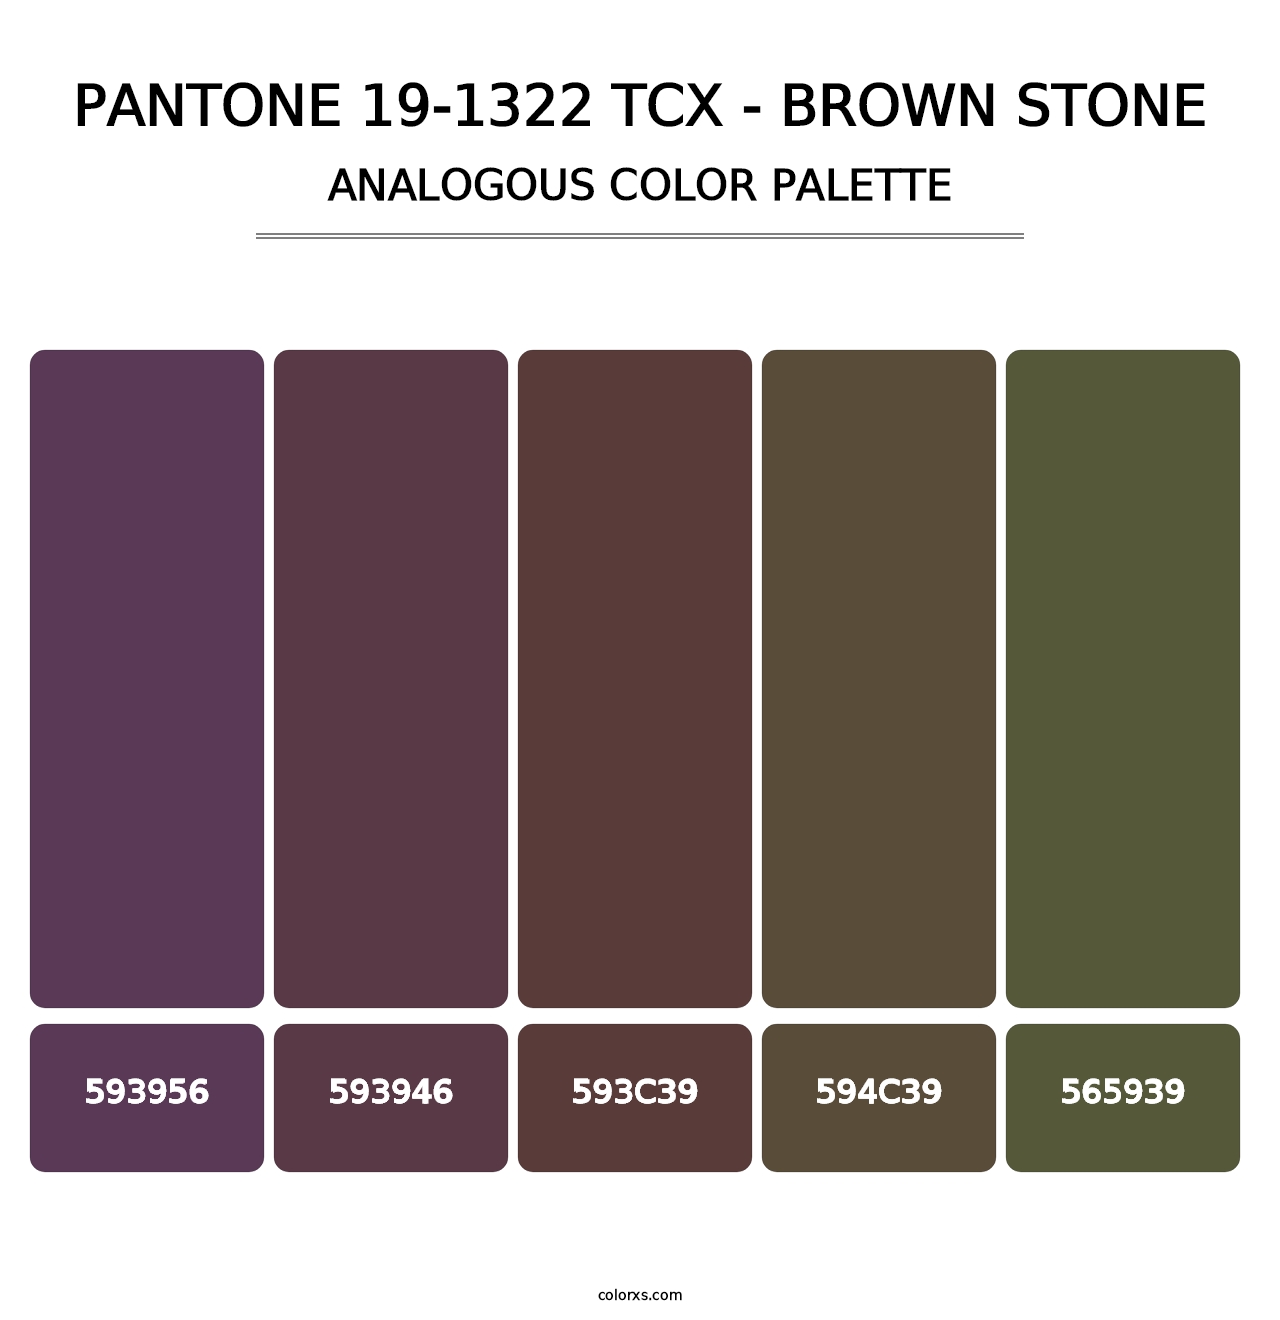 PANTONE 19-1322 TCX - Brown Stone - Analogous Color Palette